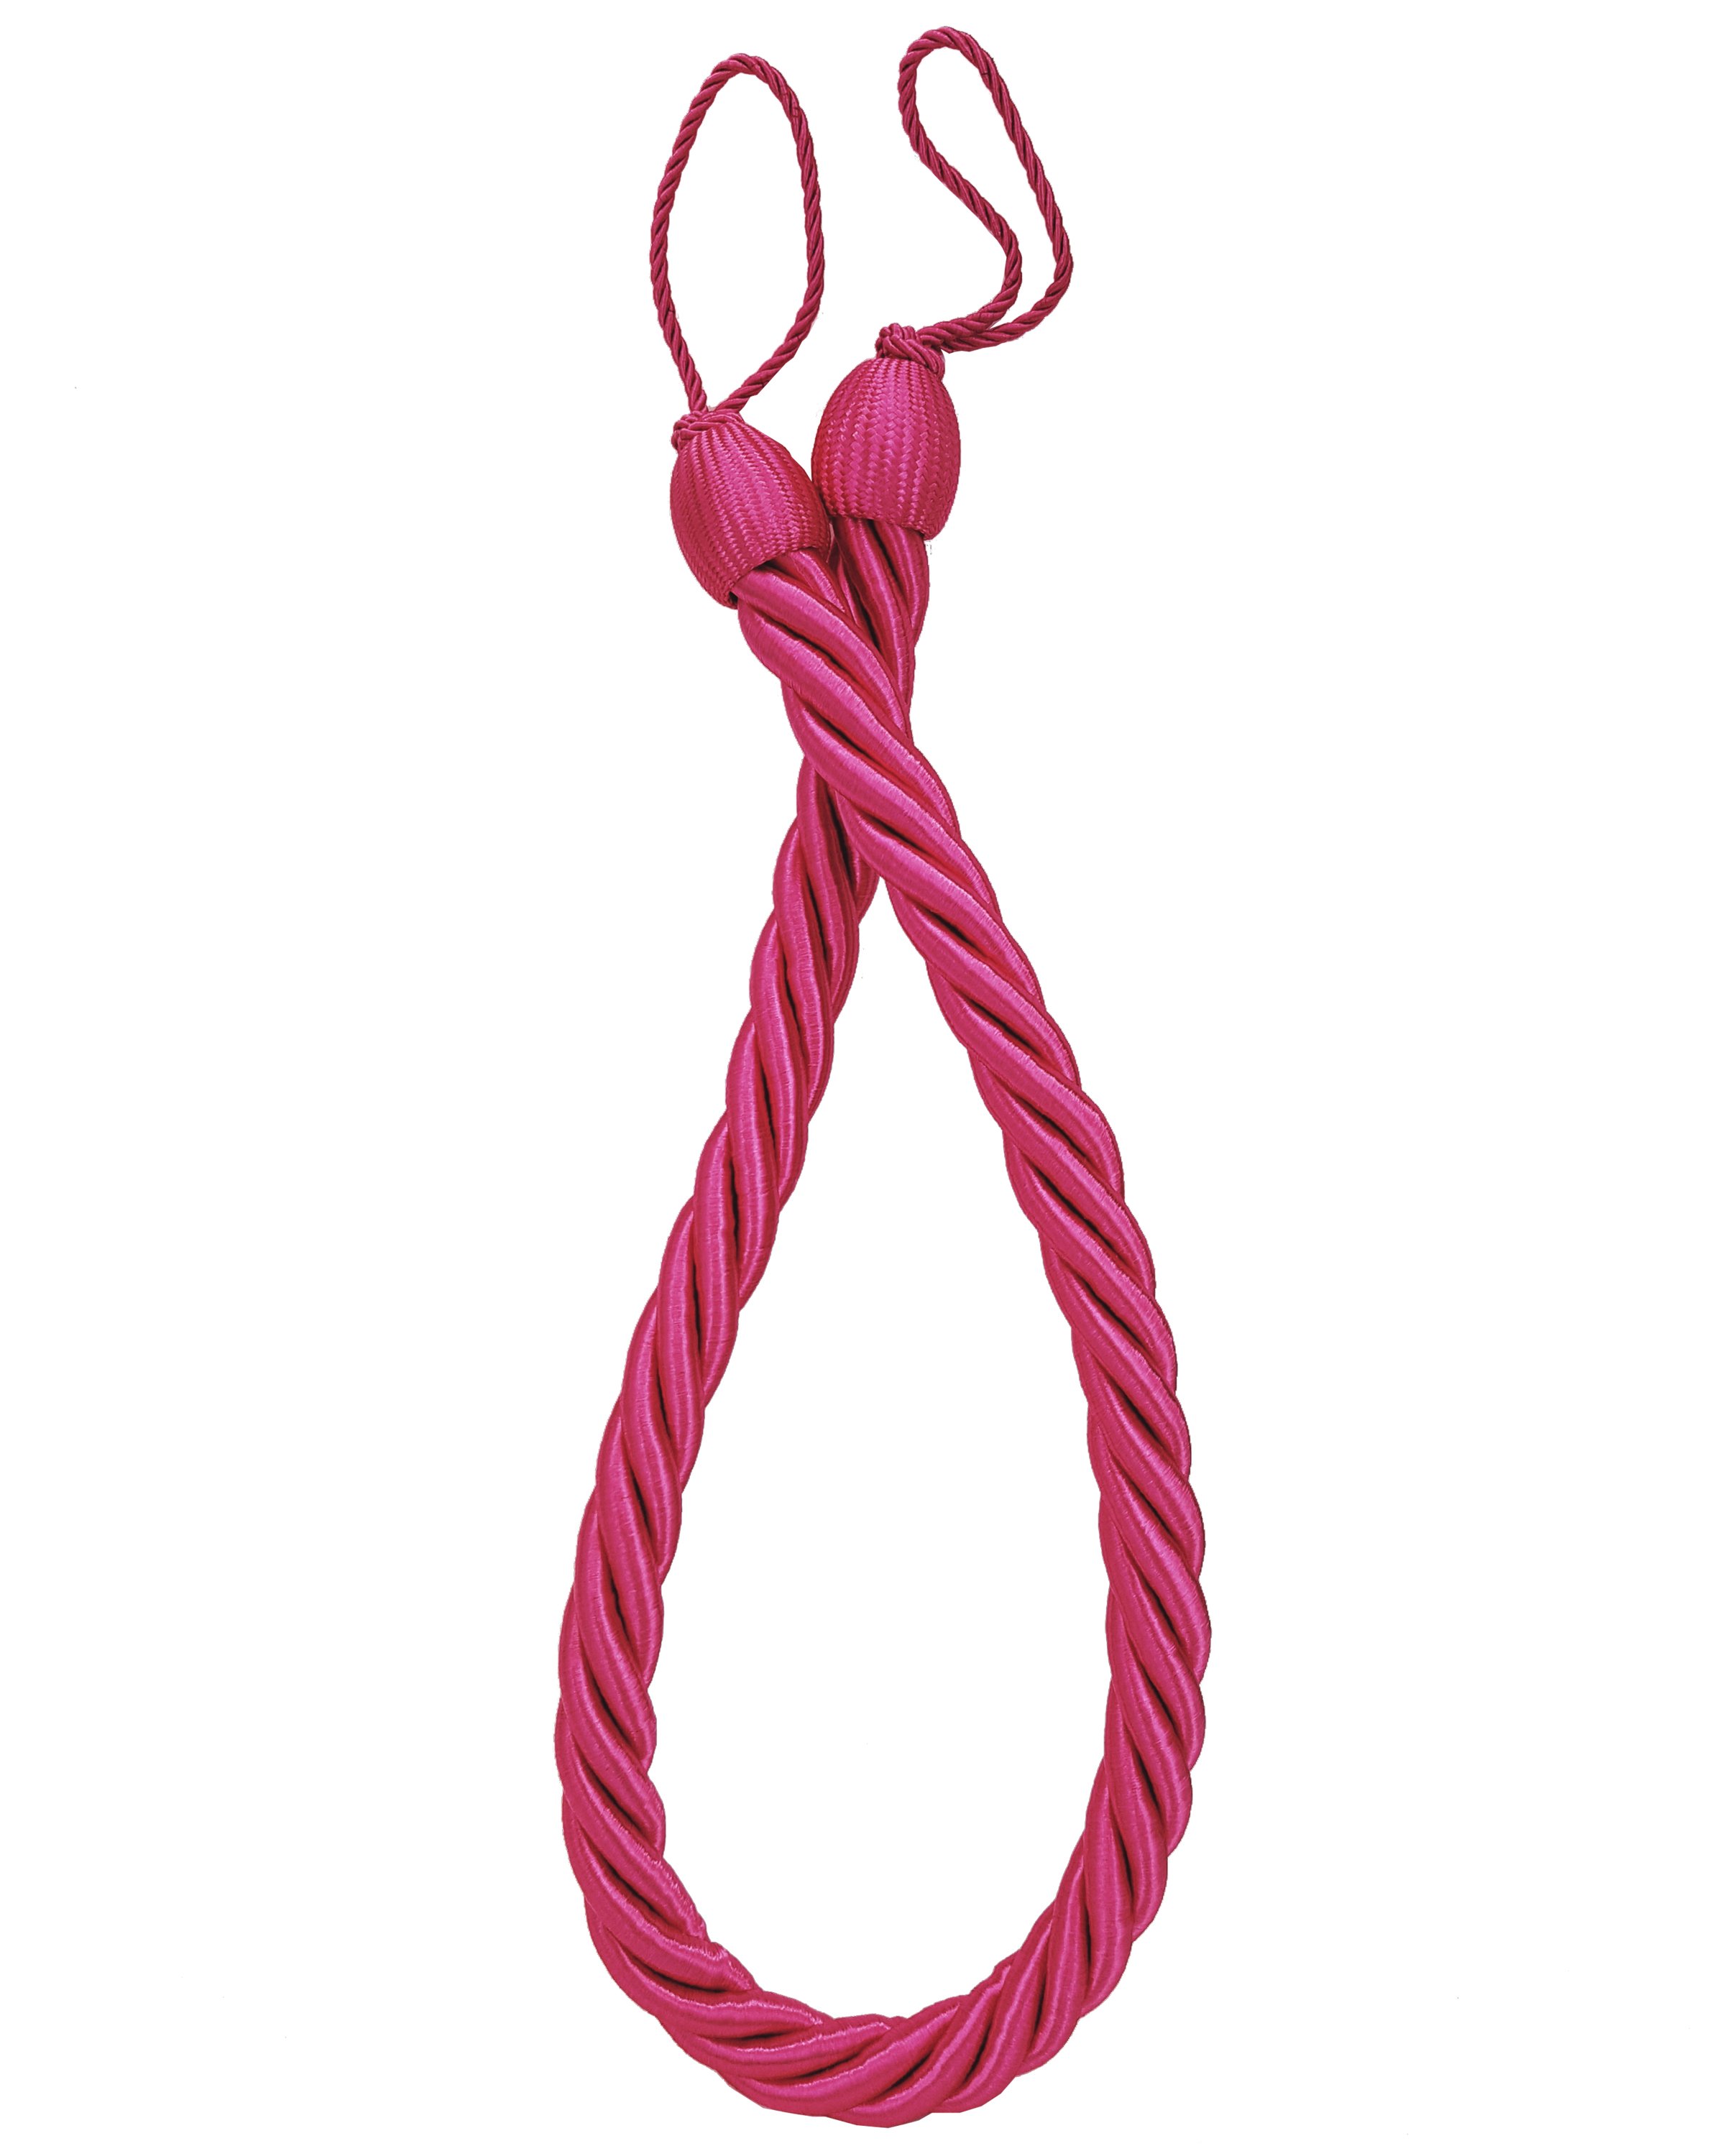 PAIR 2 pieces Curtain Tie Backs rope twist - Fuchsia Pink 85cm